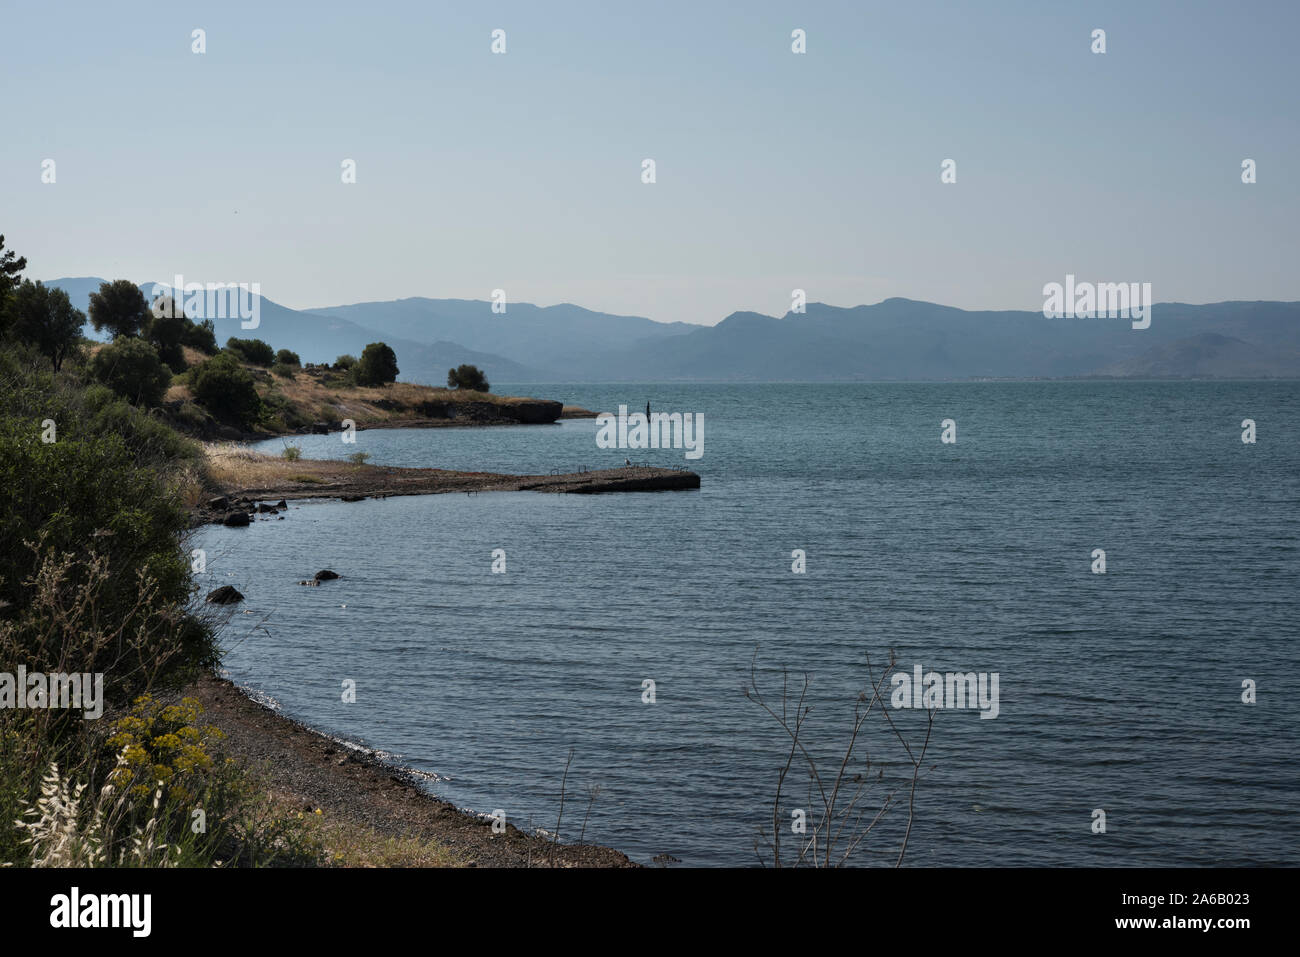 View across Kolpos Kallonis from Ahladeri, Lesbos, Greece Stock Photo